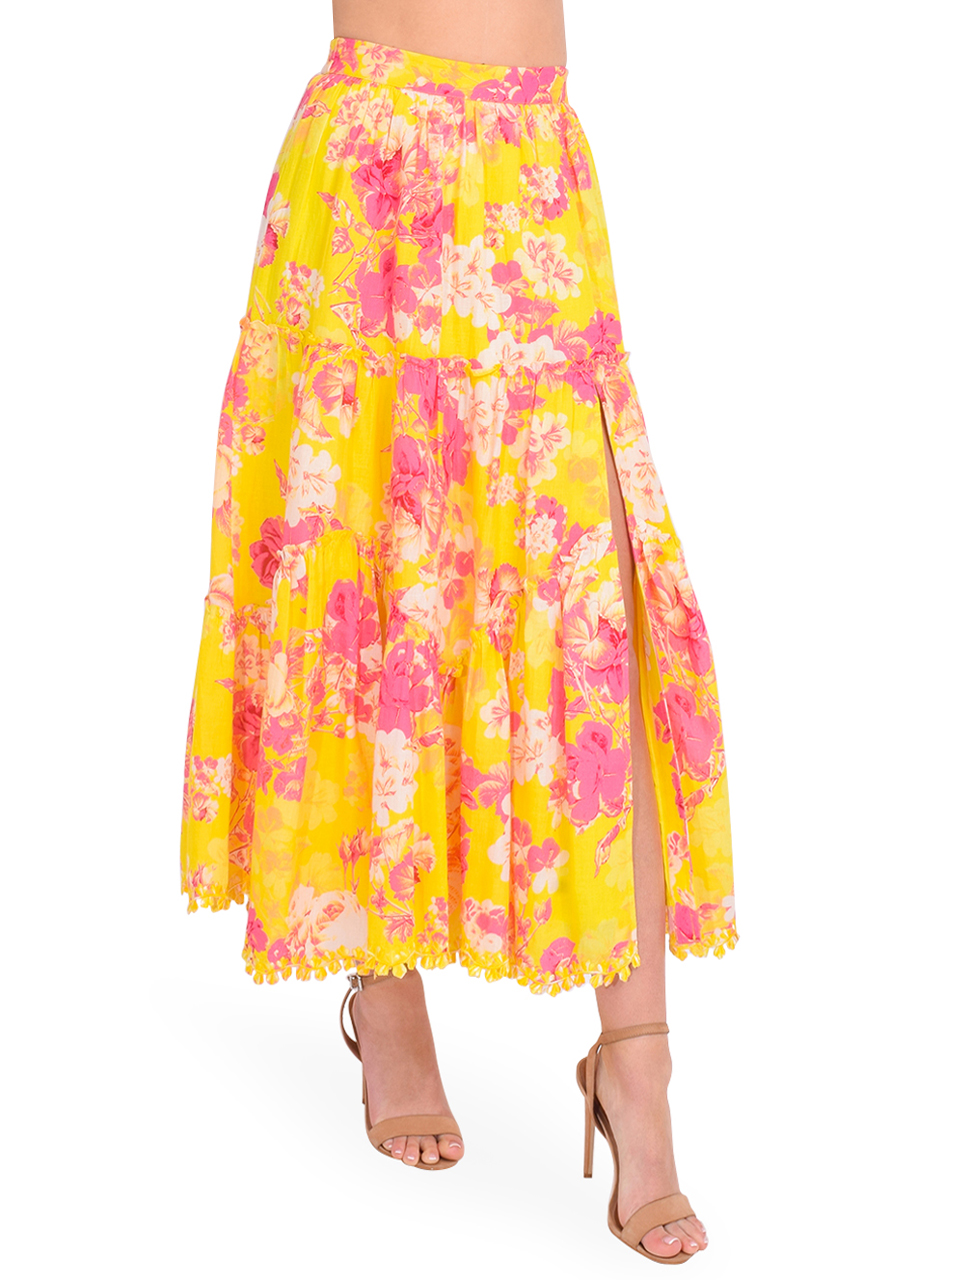 Hemant & Nandita Auril Cotton Linen Maxi Skirt in Yellow Side View 